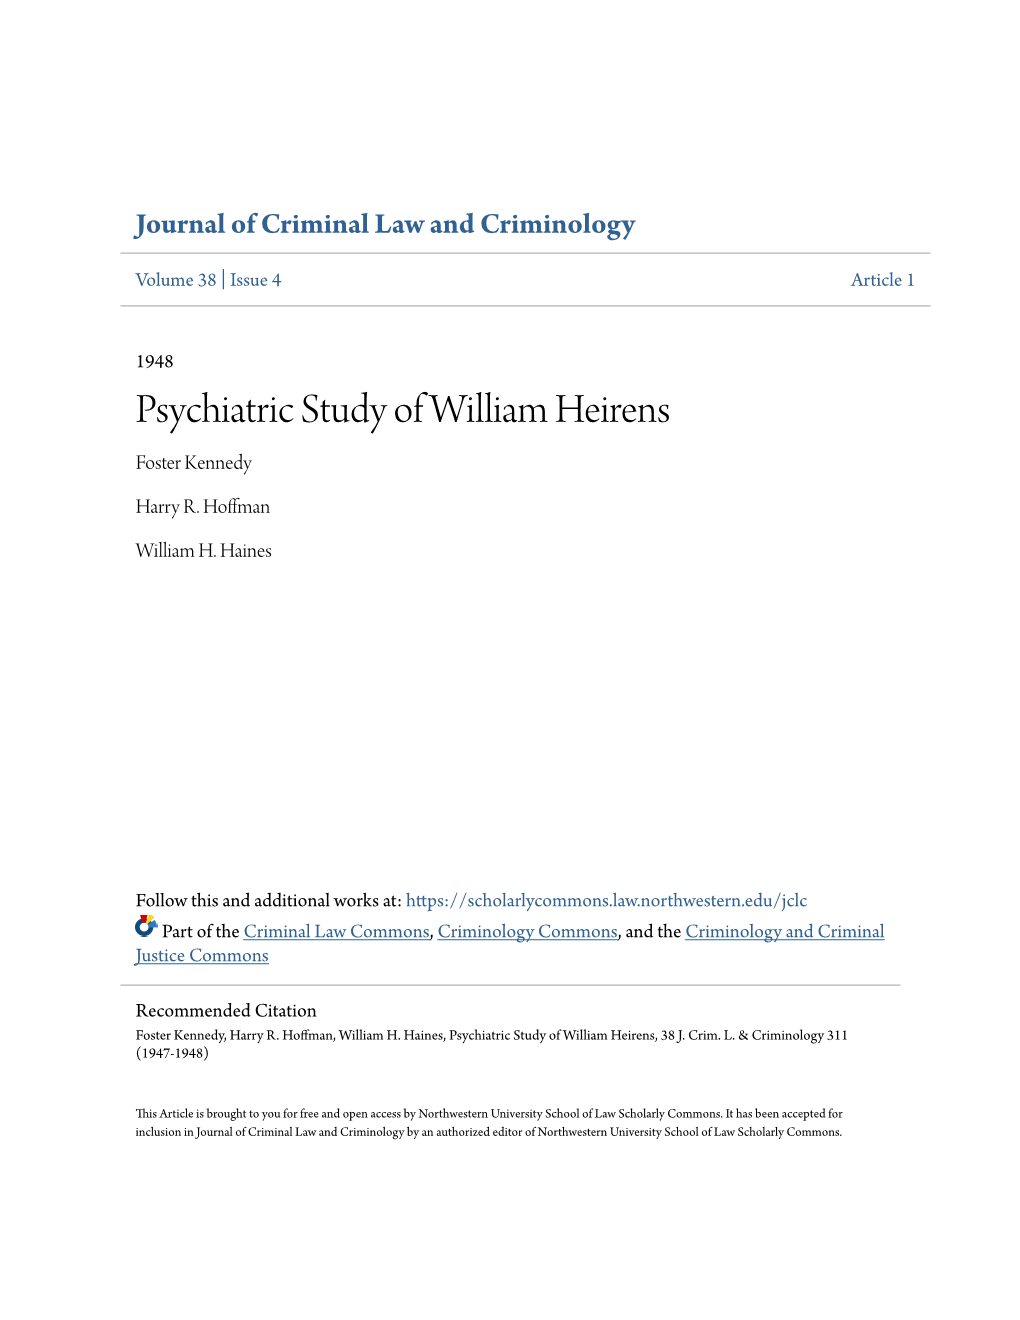 Psychiatric Study of William Heirens Foster Kennedy